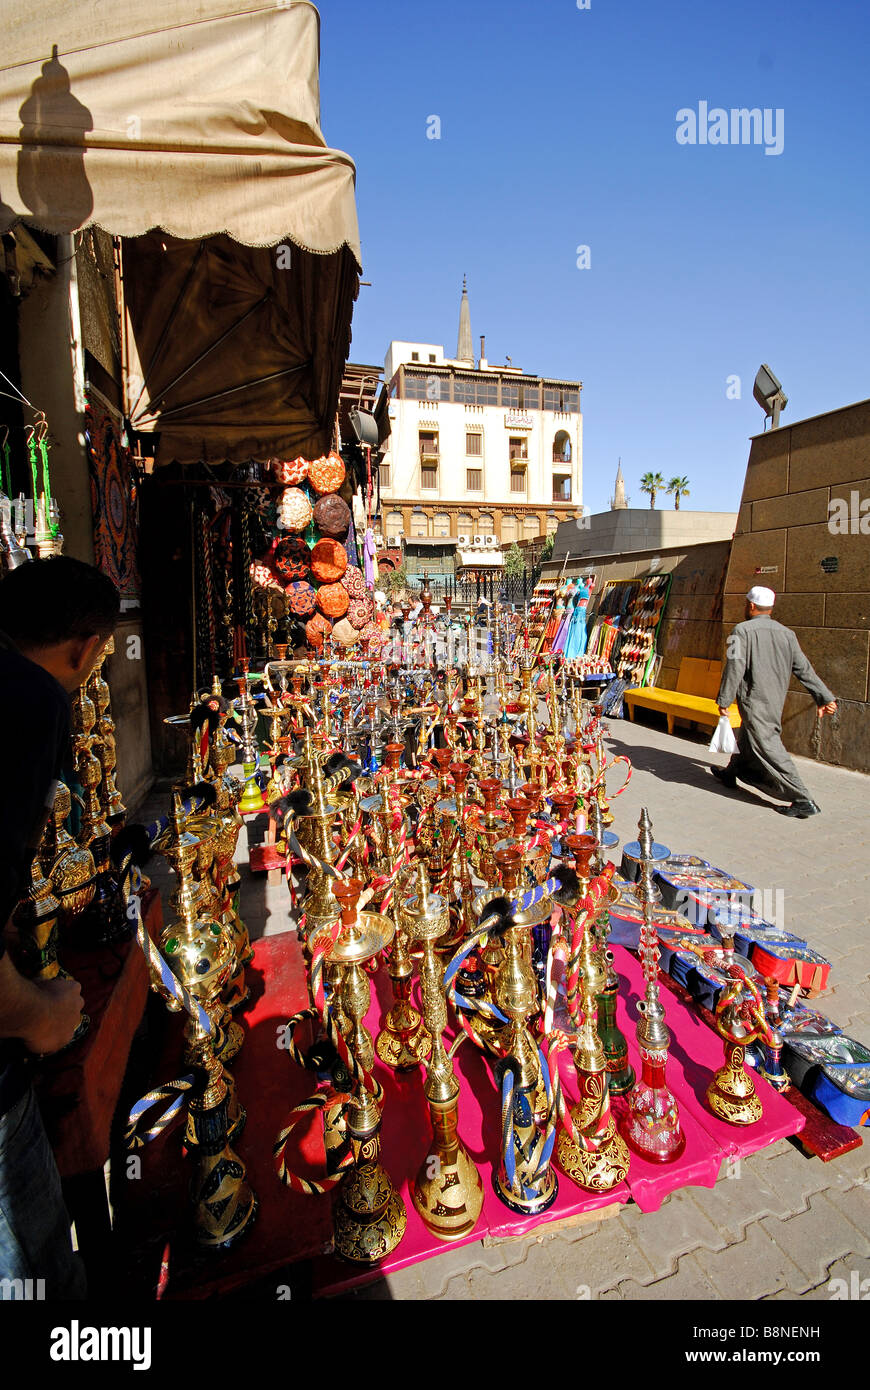 CAIRO, EGYPT. A sheesha shop in the Khan el-Khalili Bazaar in Islamic Cairo. 2009. Stock Photo